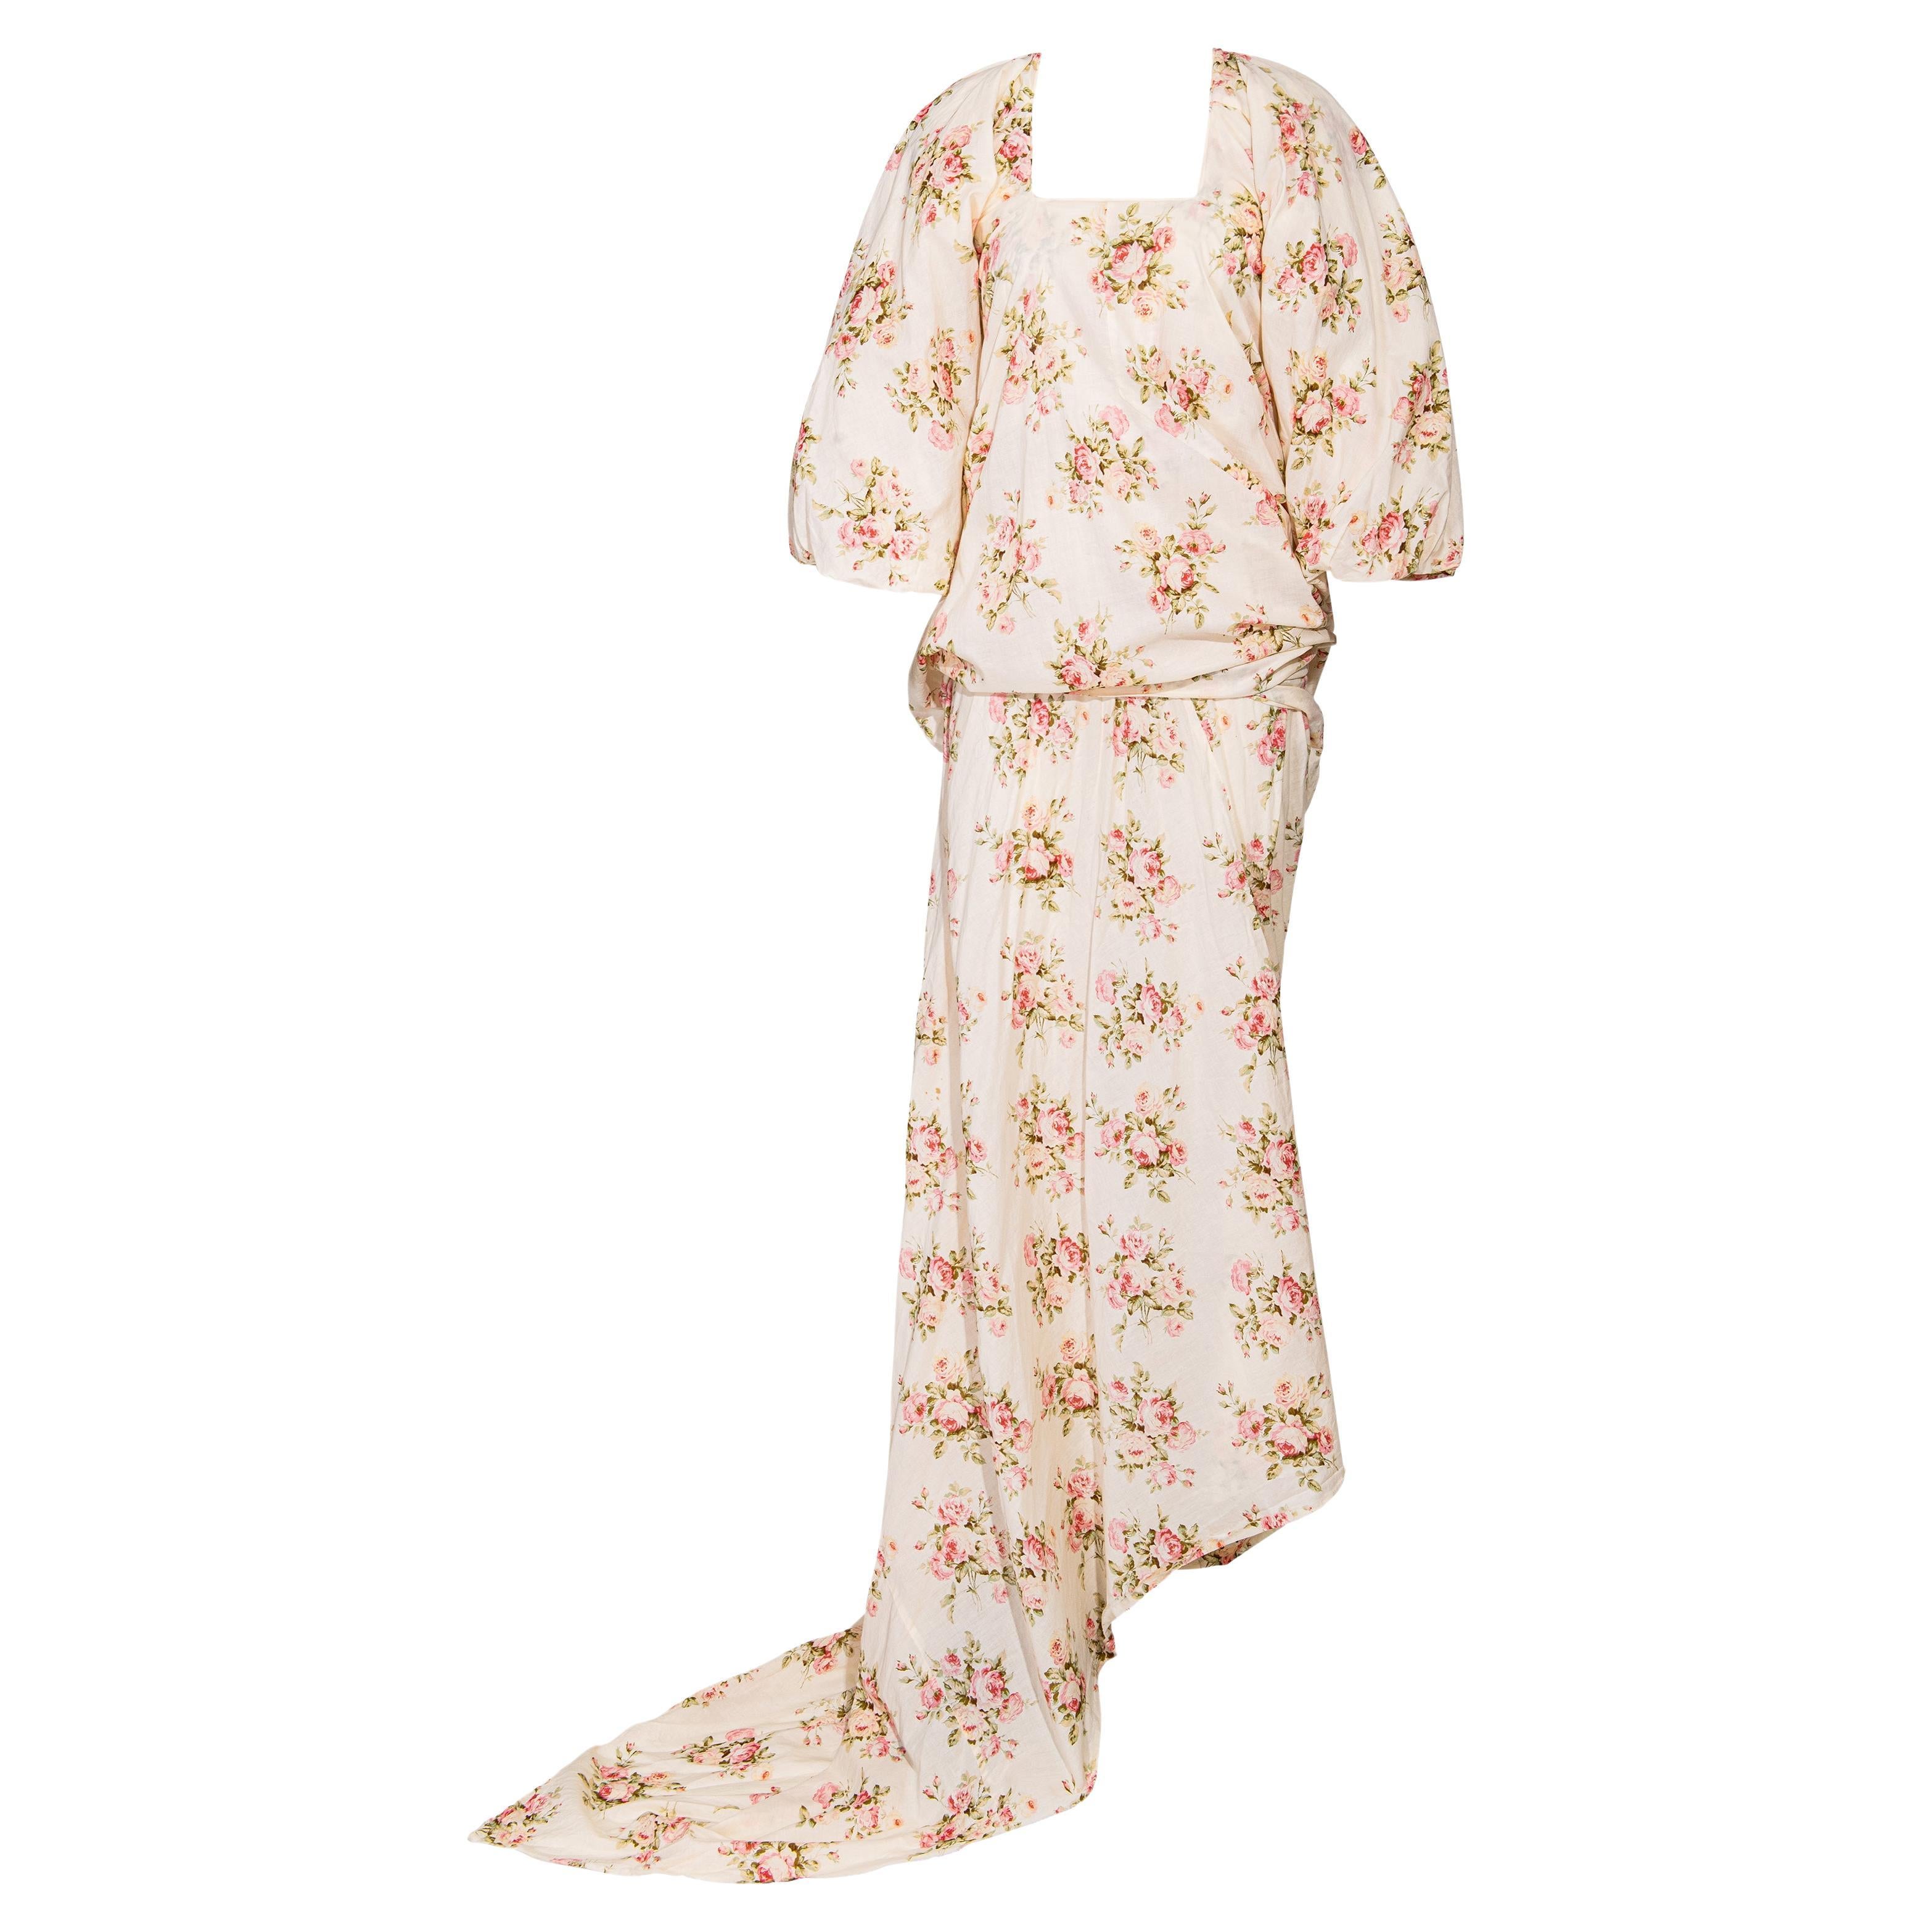 S/S 2008 Junya Watanabe Ecru Cotton Dress with Pink Floral Pattern